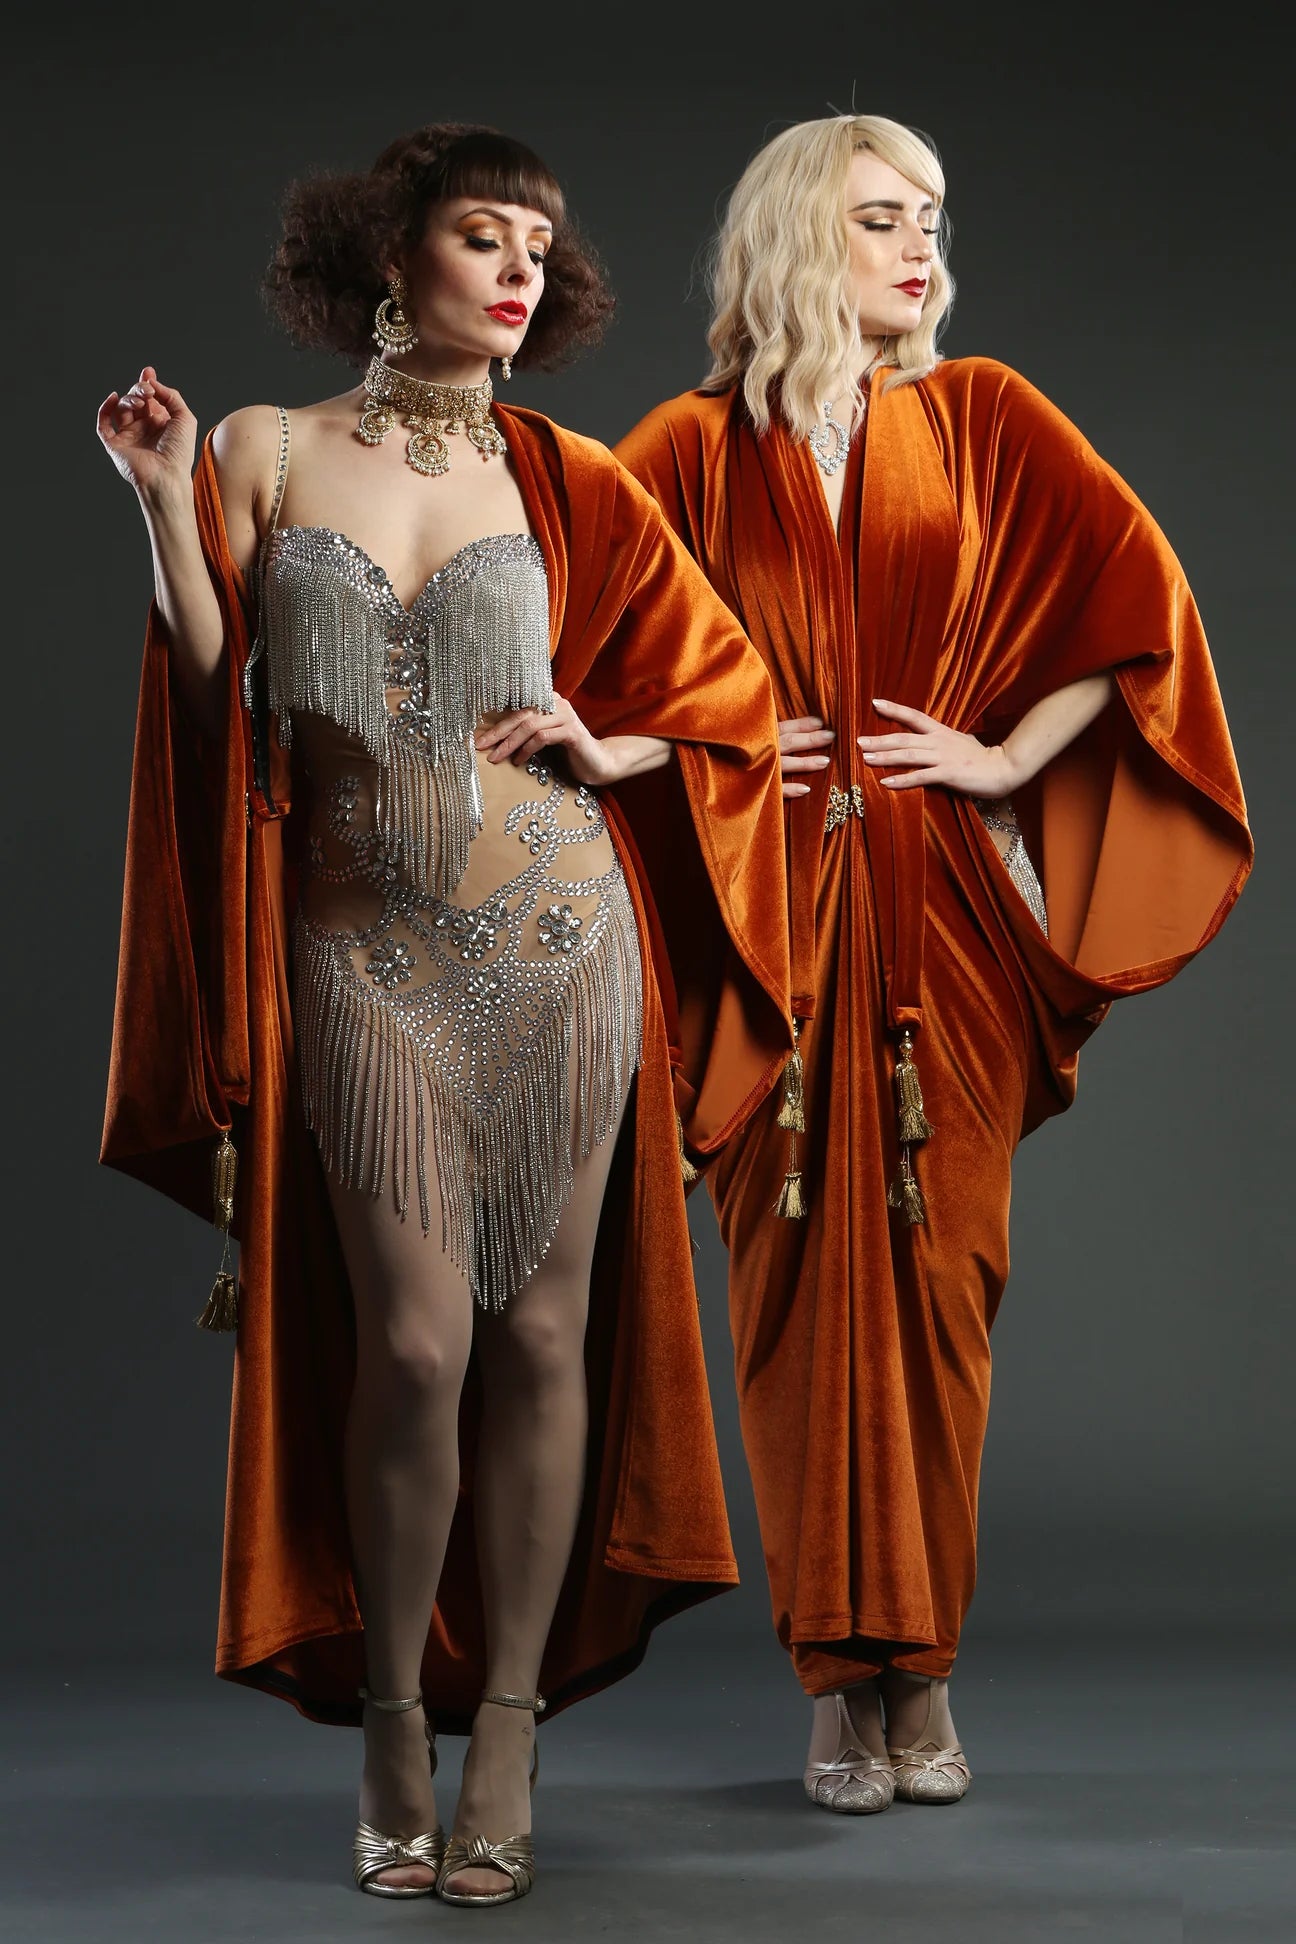 Burlesque Costume ideas and insiration